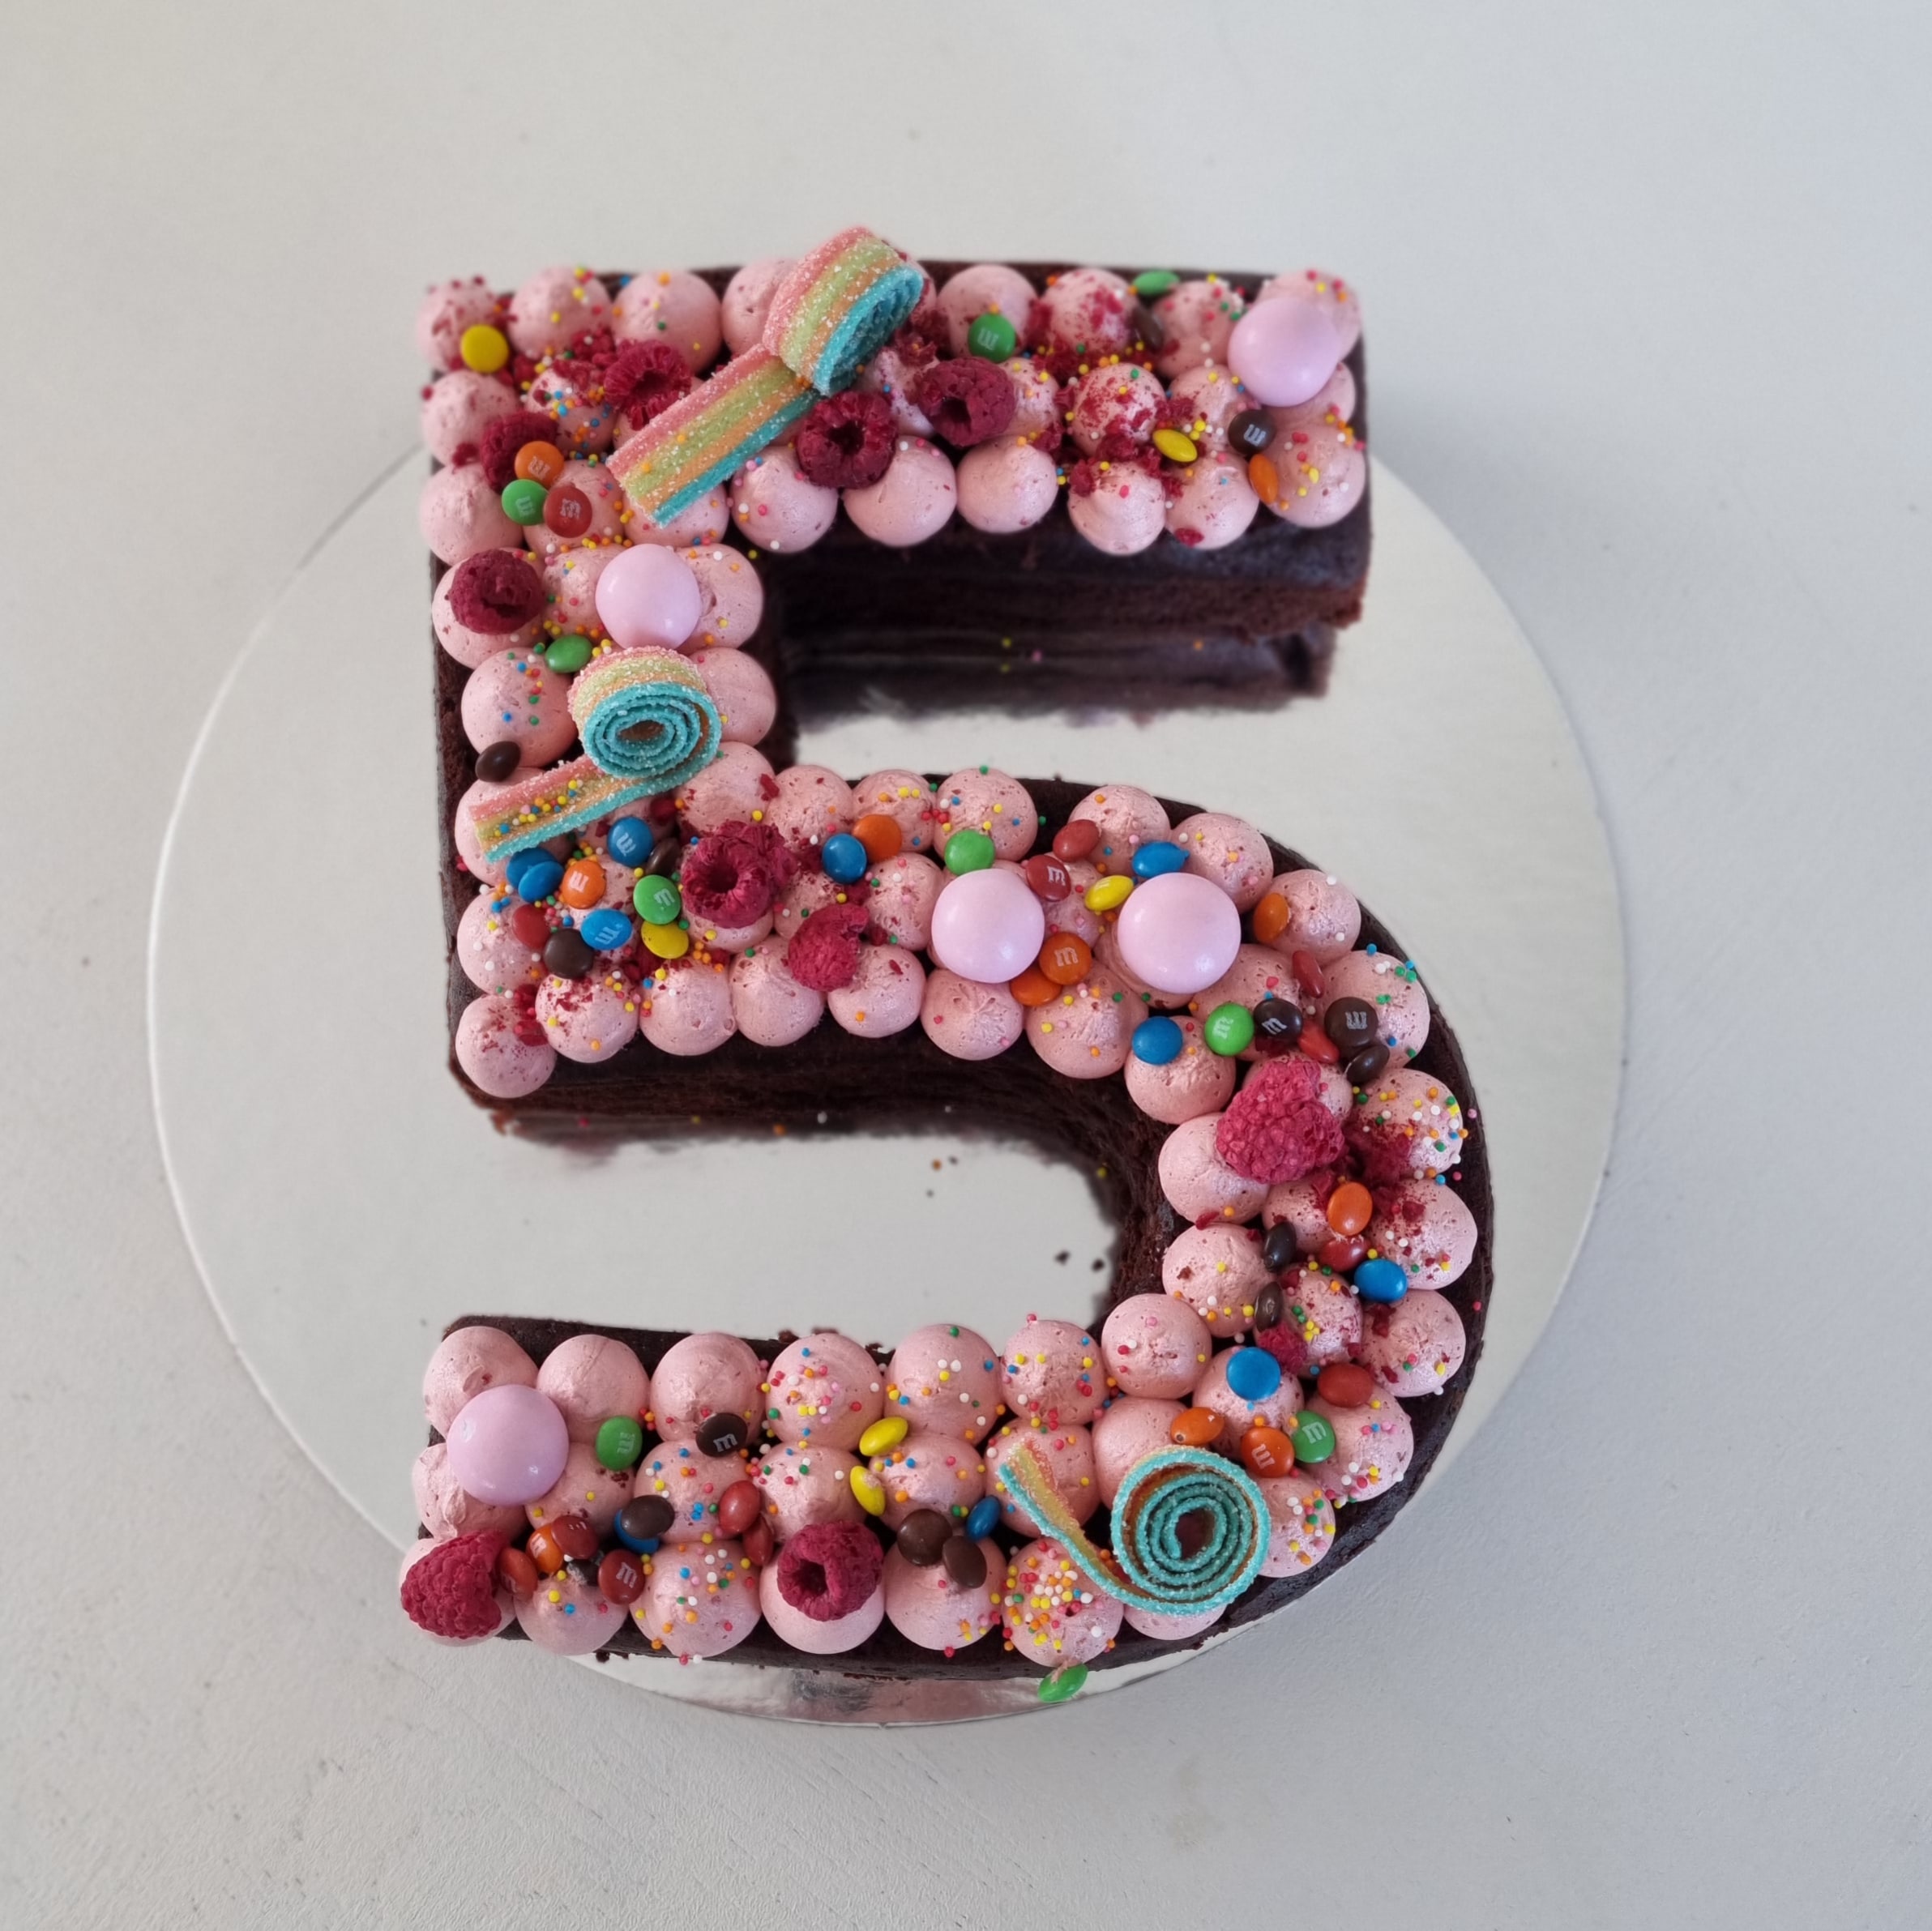 How to Make Number 5 Birthday Cake | ASMR Video - YouTube